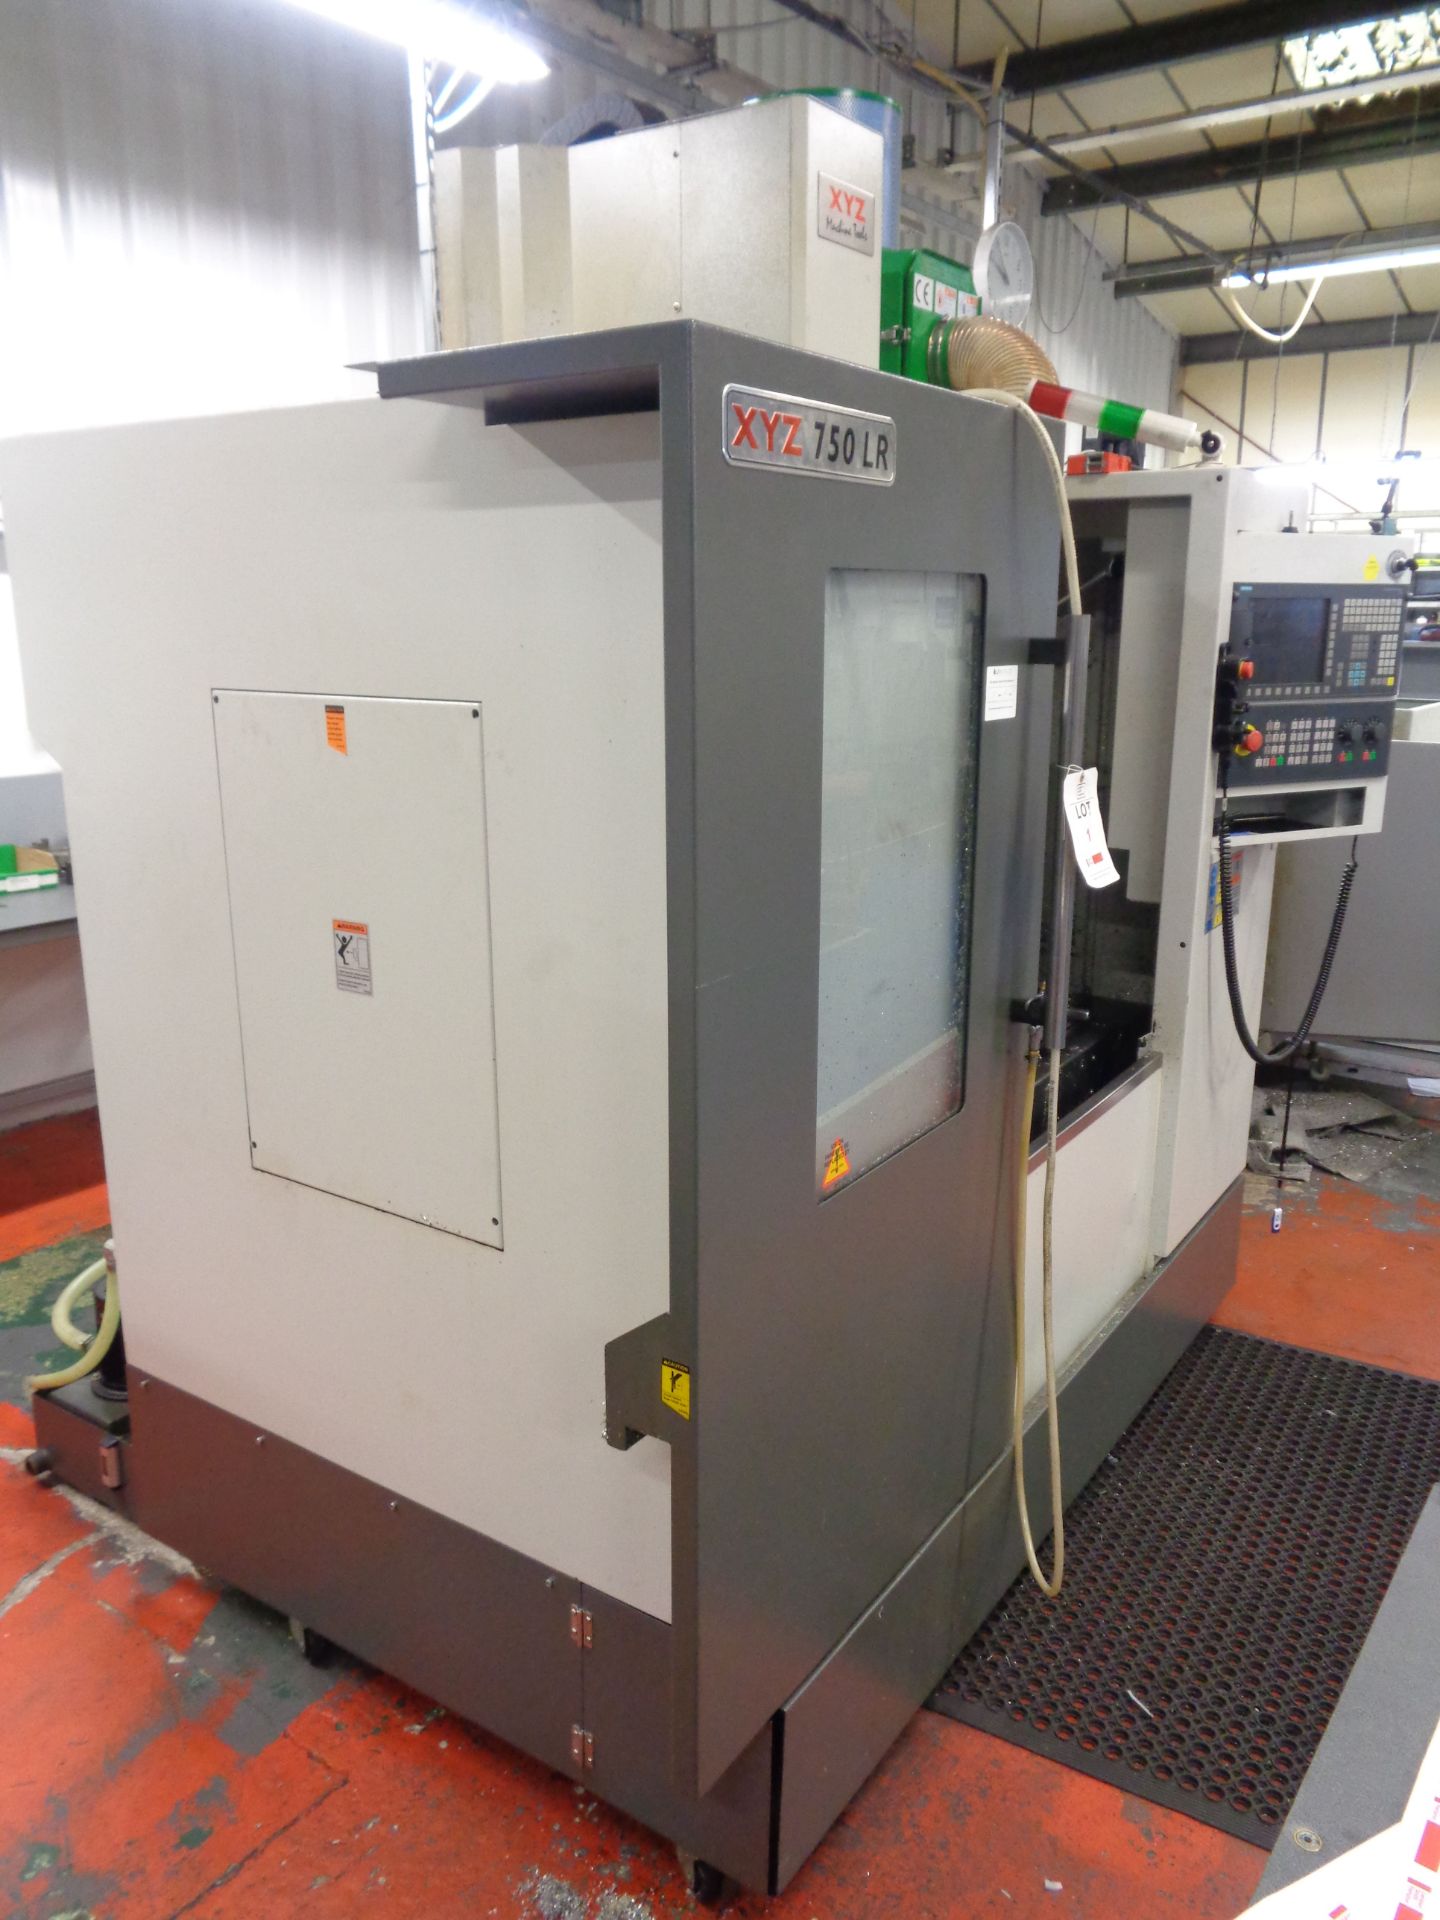 XYZ 750 LR CNC vertical machining centre serial no. SMA10155 (2018), 20 ATC table size 830 x - Image 3 of 10